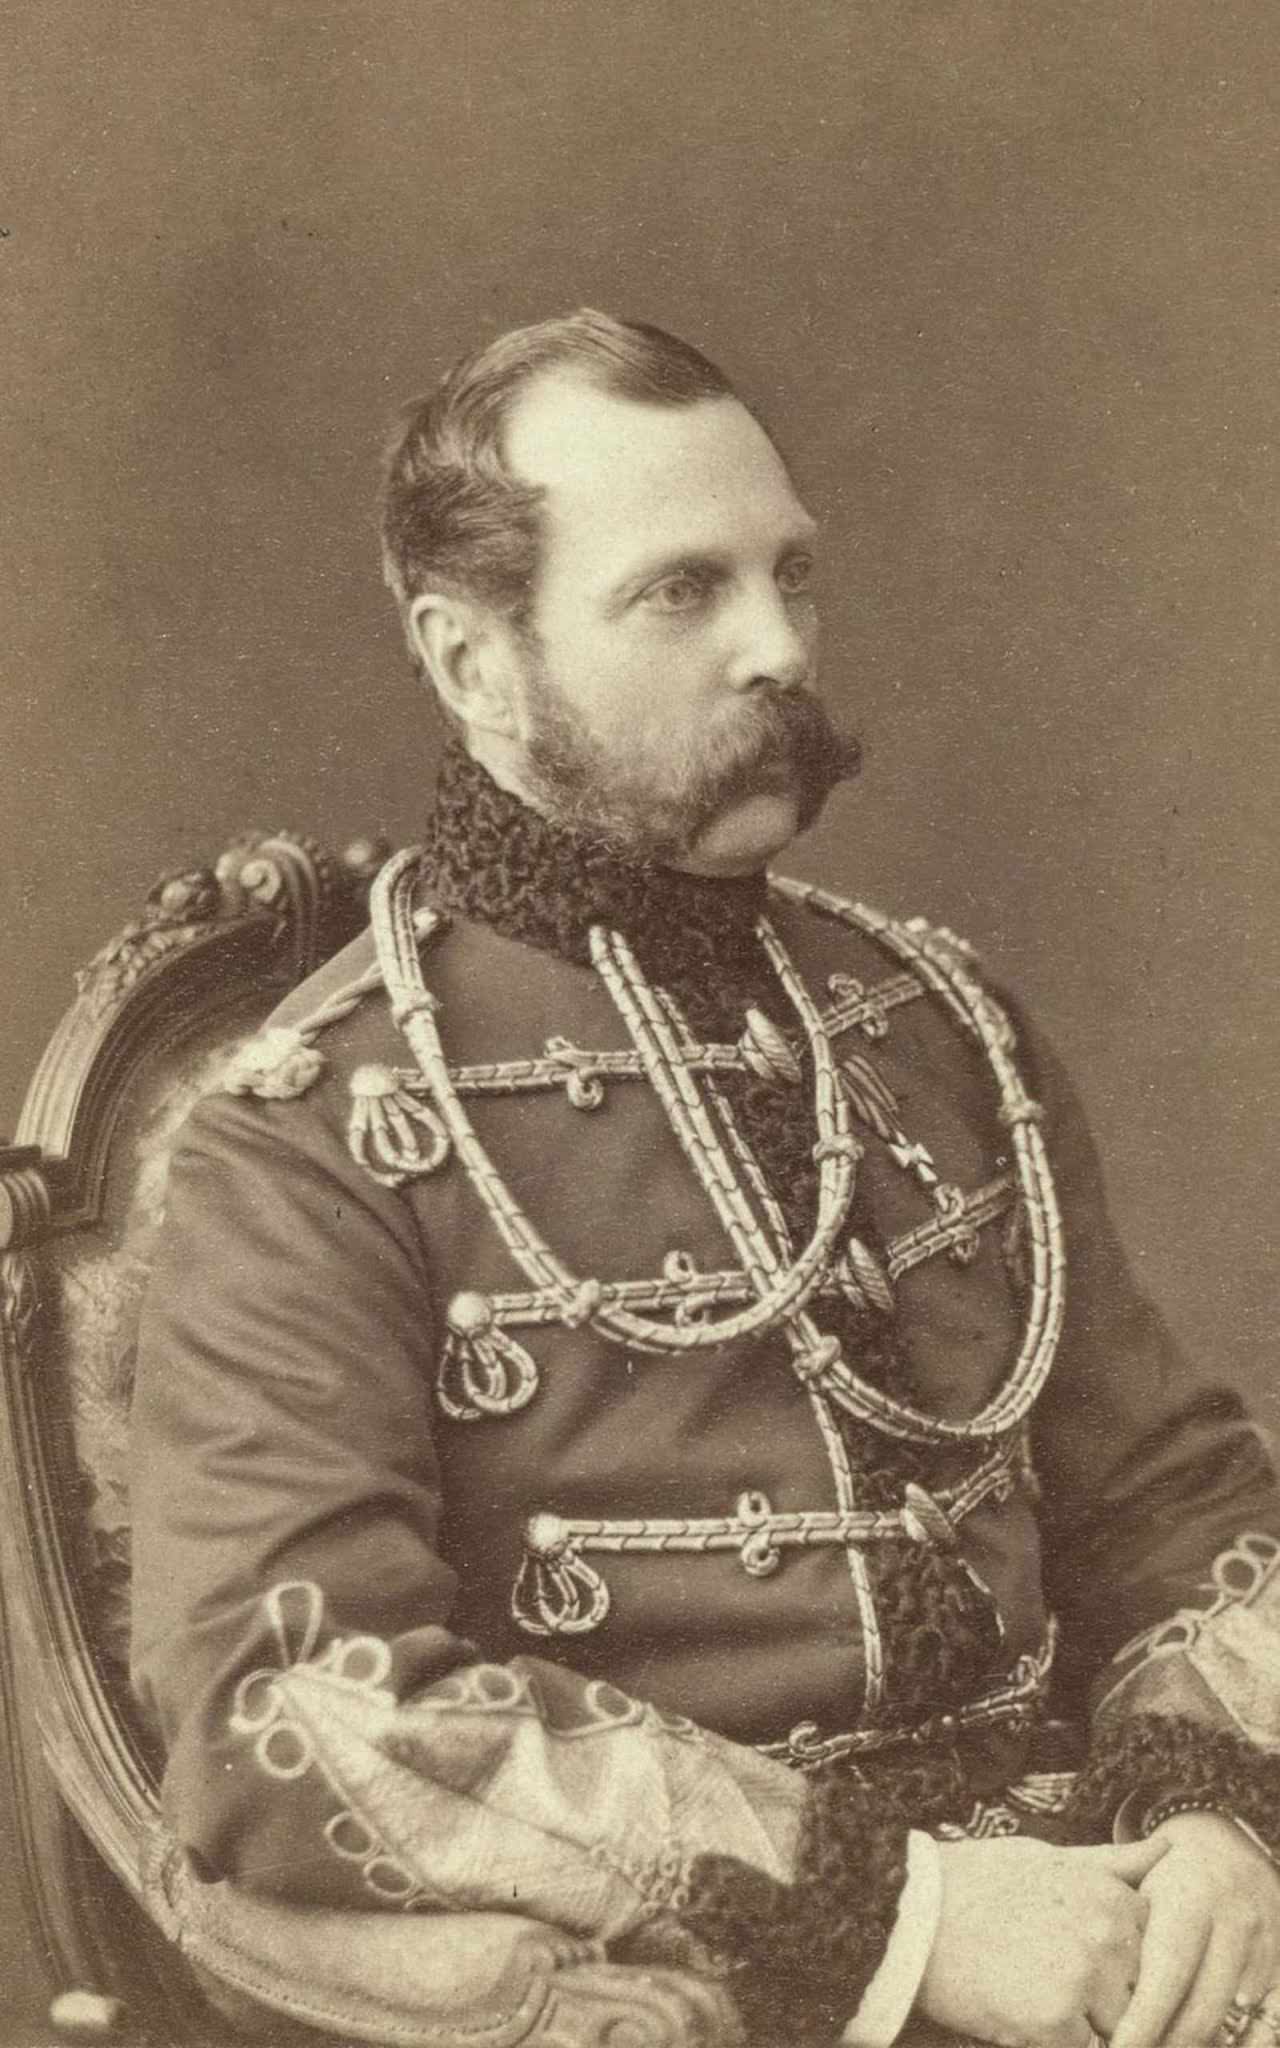 Alexander II, Emperor of Russia from 1855 to 1881.